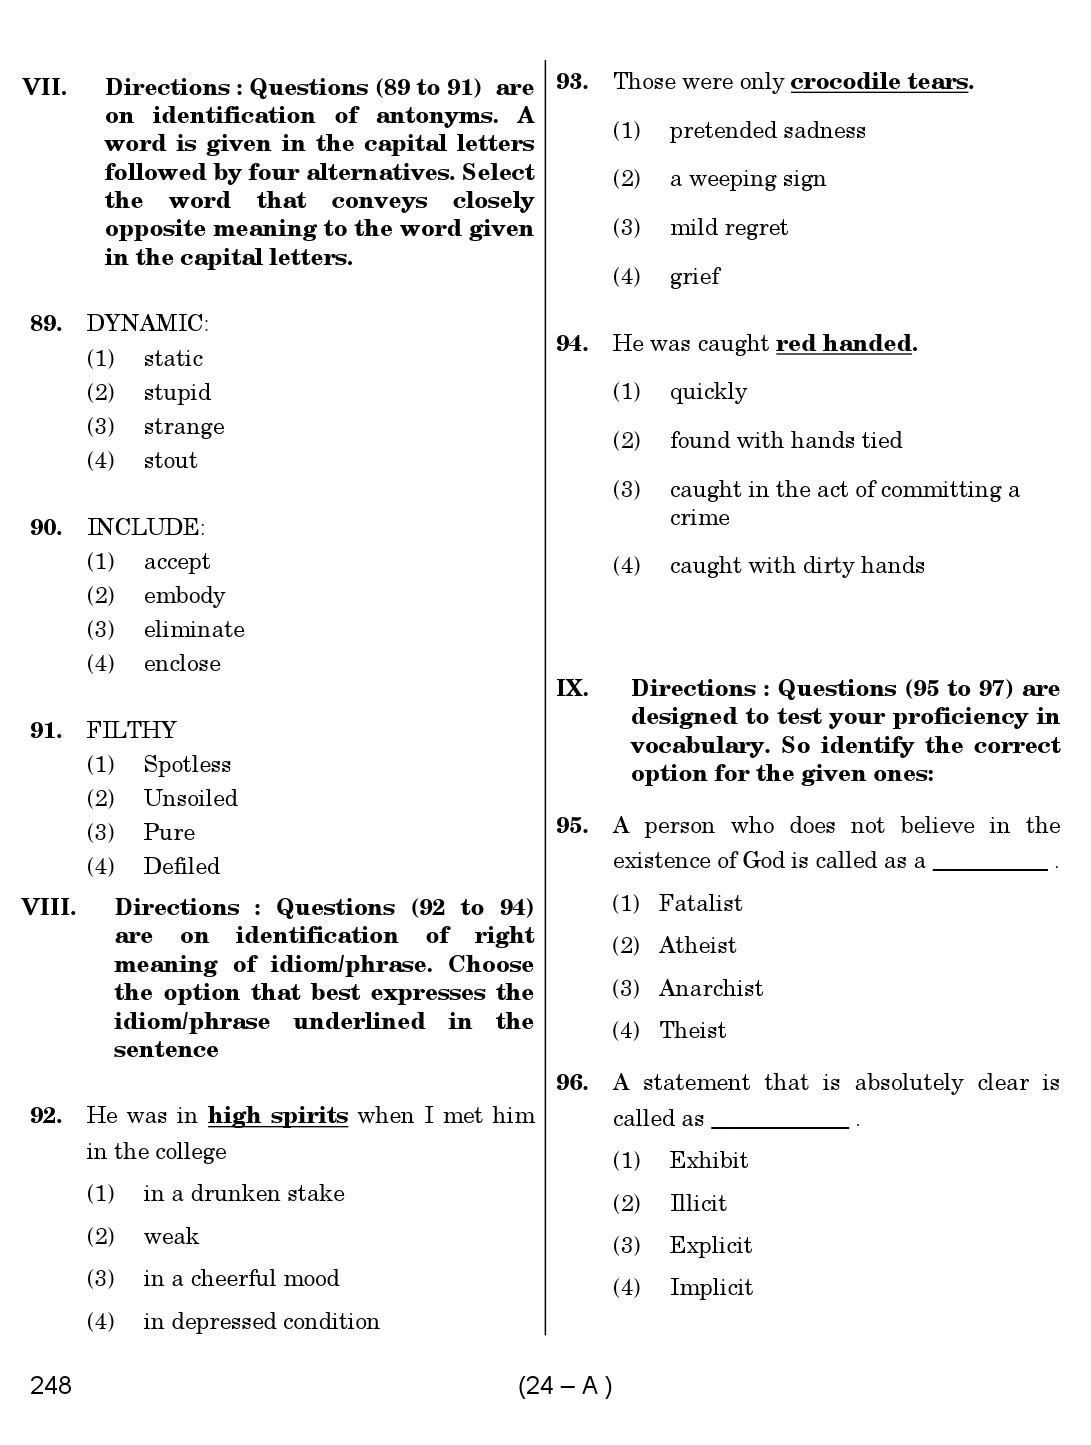 Karnataka PSC Laboratory Assistant Exam Sample Question Paper 24